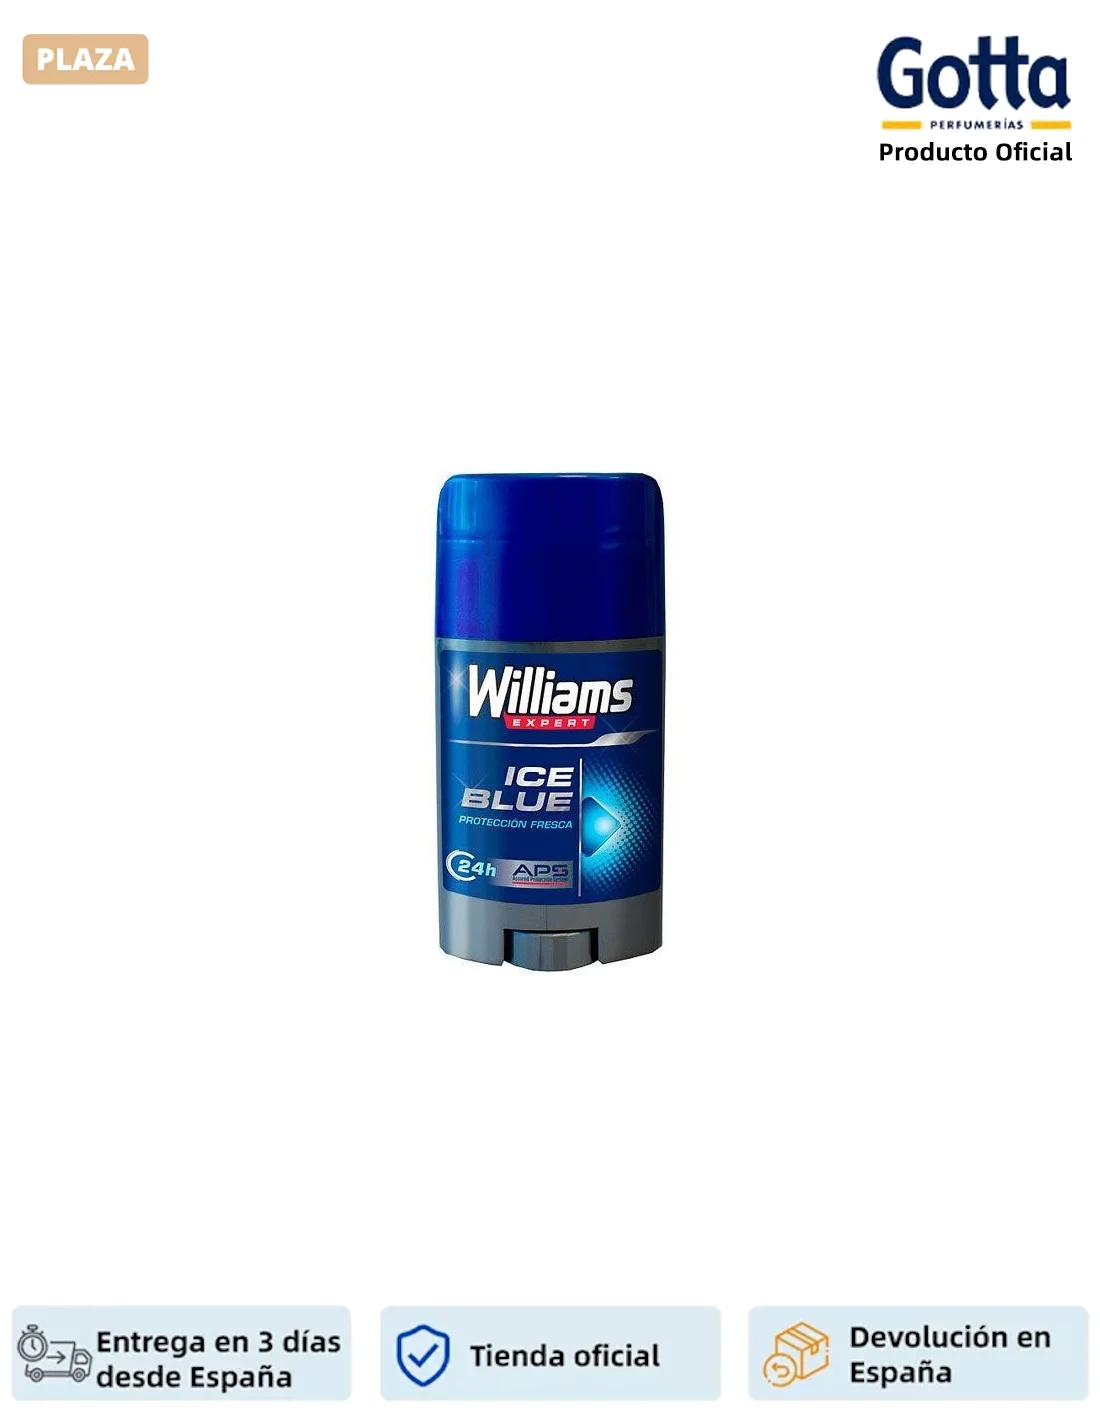 WILLIAMS - ICE BLUE STICK deodorant-75 & Beauty, & deodorants, deodorants-effective portection for men. _ - AliExpress Mobile